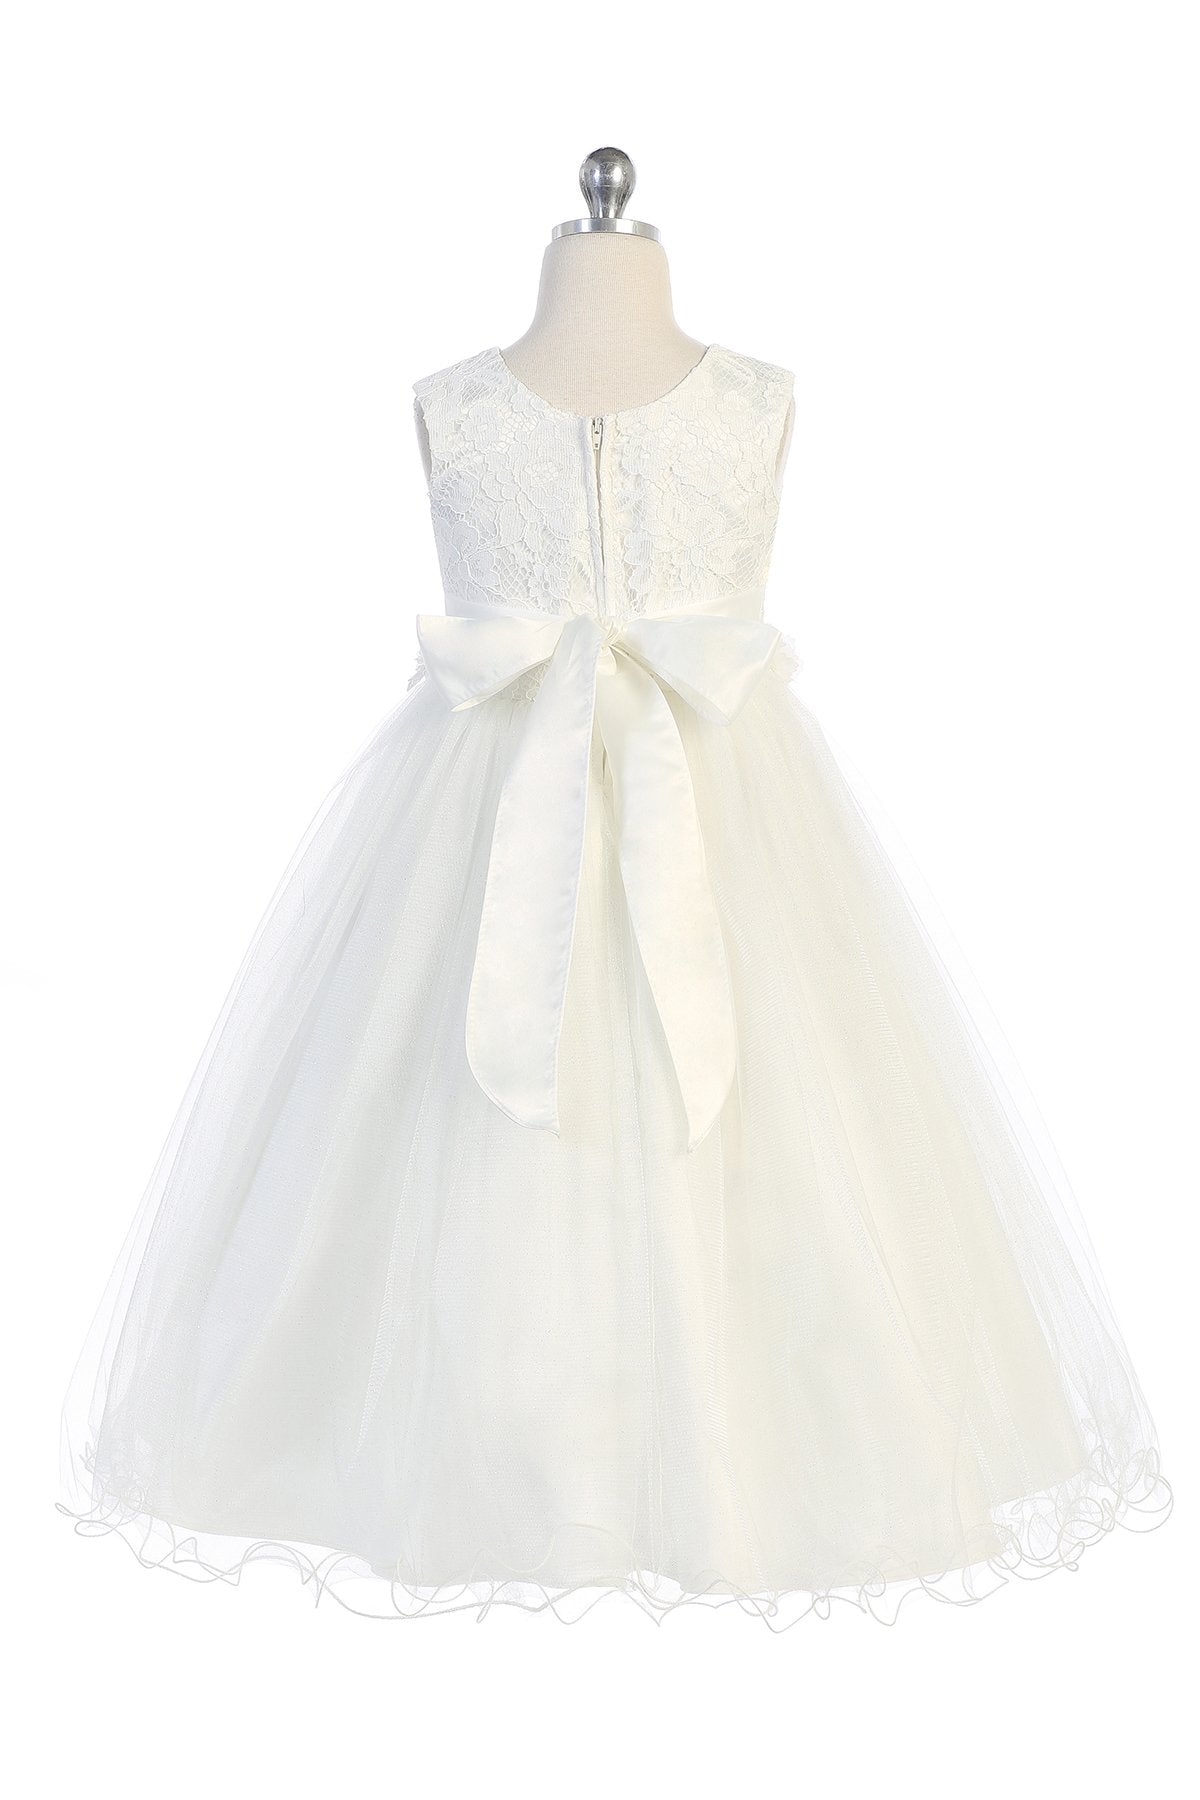 Dress - Lace Glitter Tulle Plus Size Dress